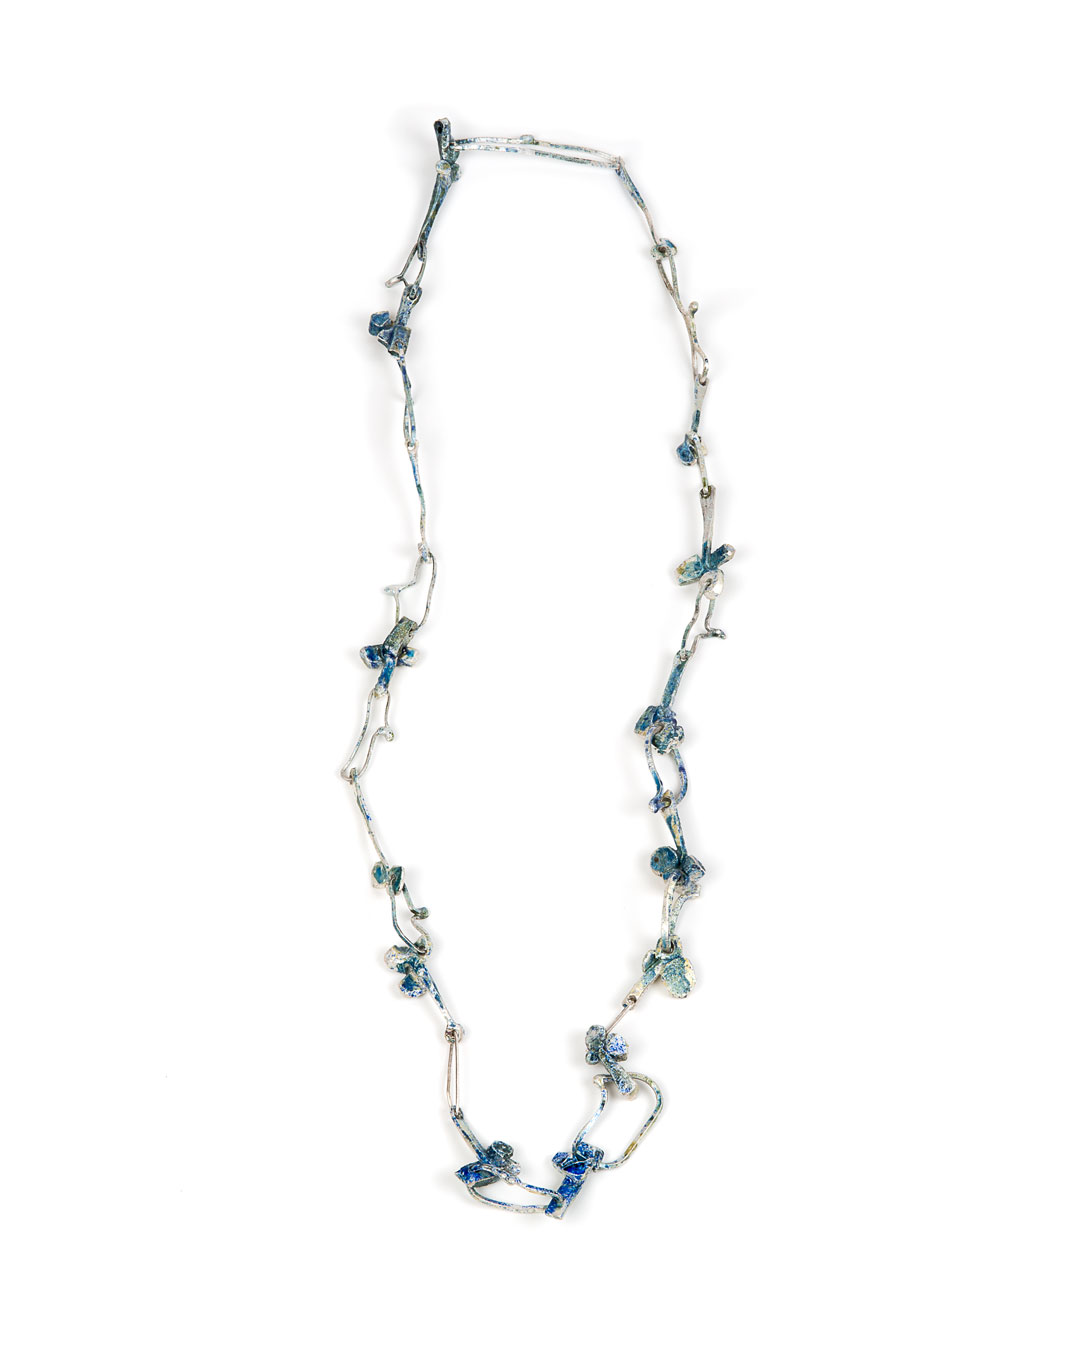 Rudolf Kocéa, Clubs, 2019, necklace; fine silver, enamel, L 800 mm, €2800